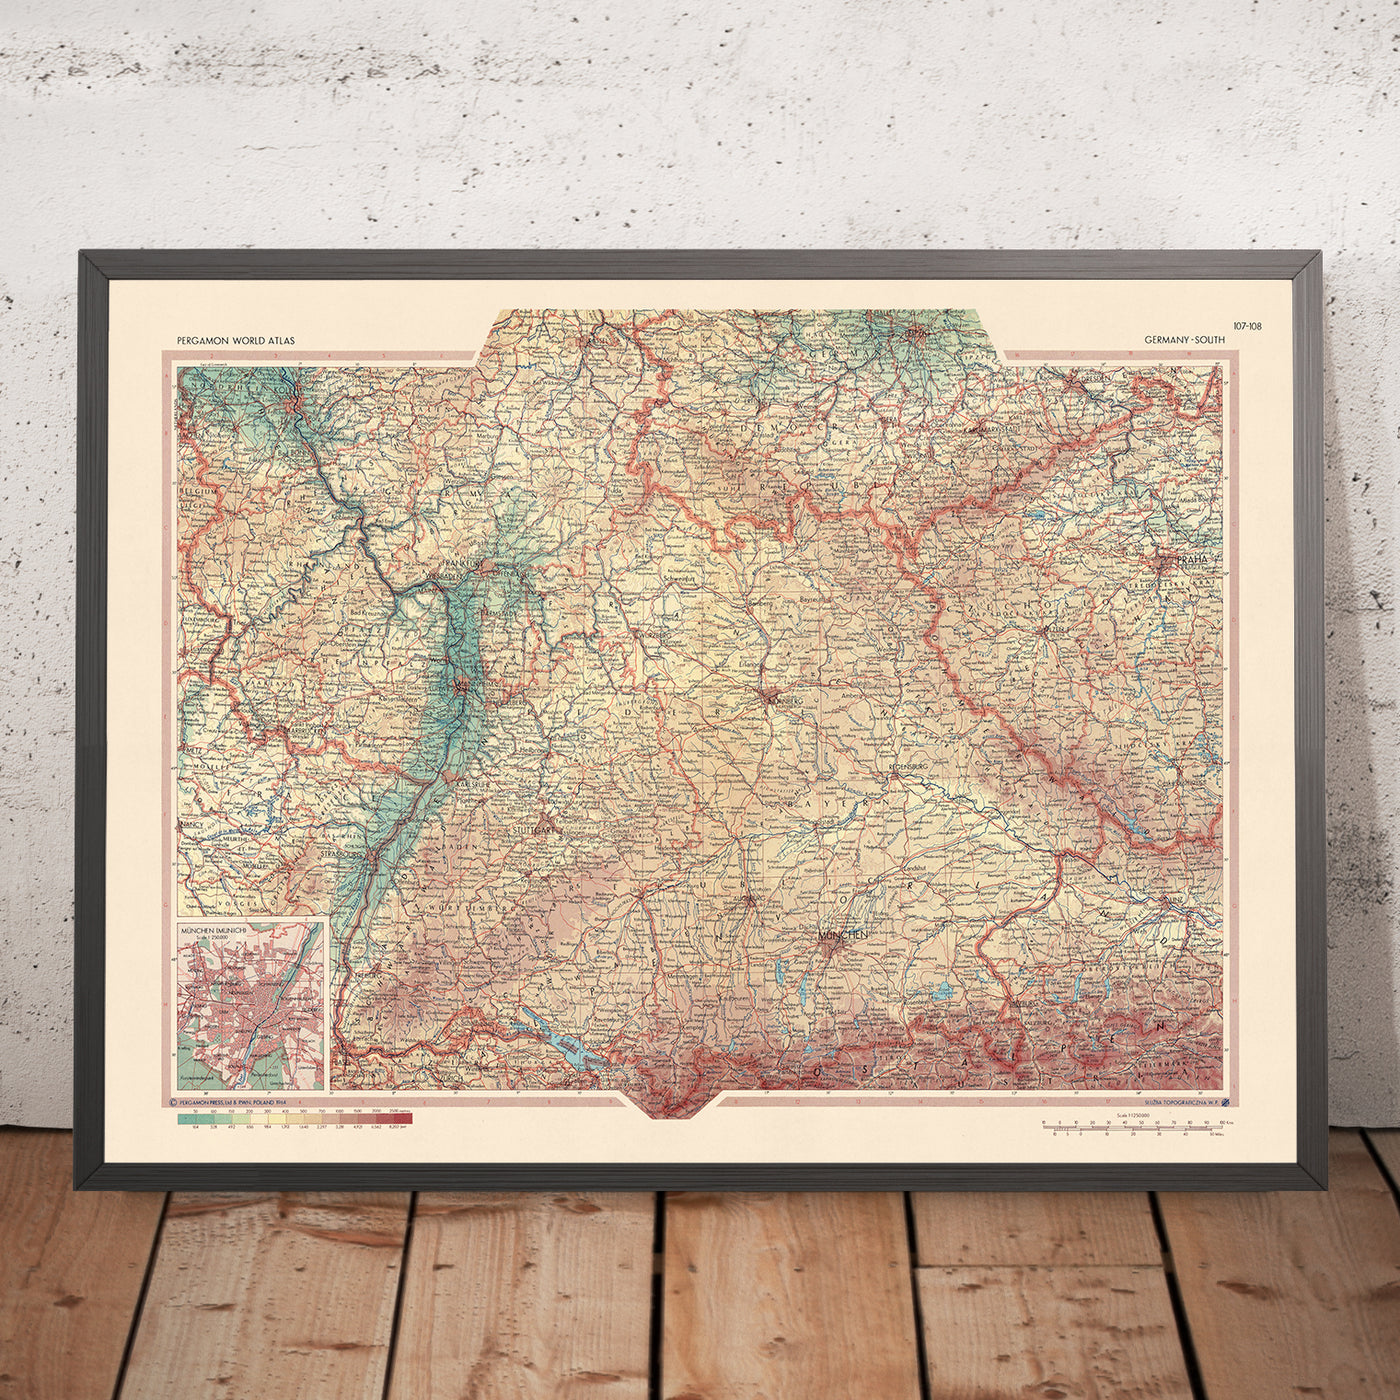 Old Map of Southern Germany, 1967: Rhineland-Palatinate, Baden-Württemberg, Thuringia, Hesse, Bavaria